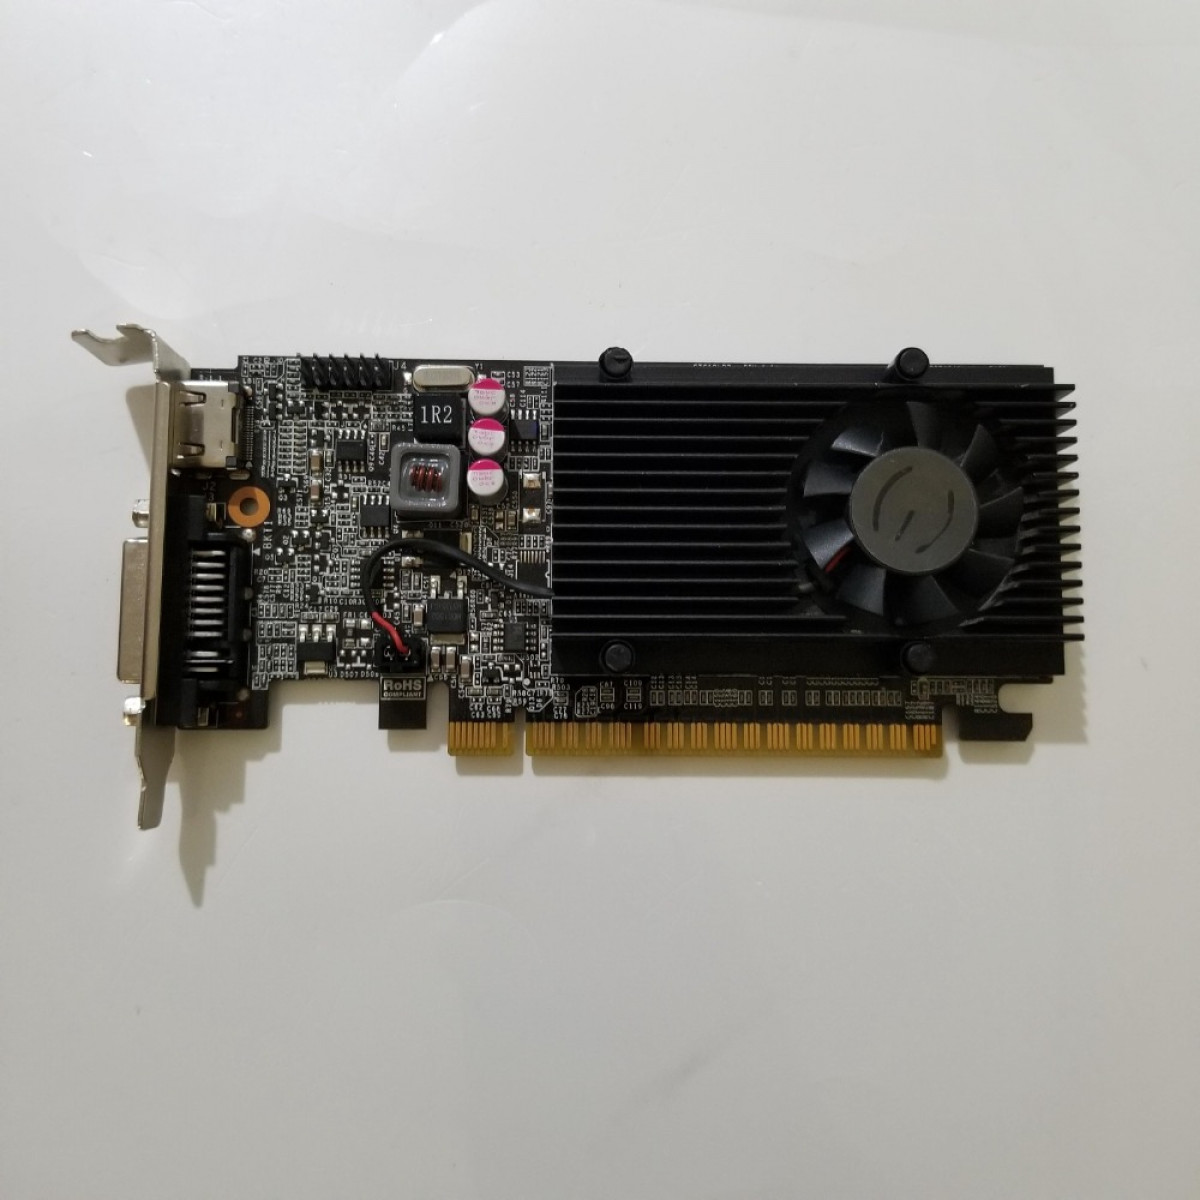 EVGA GeForce GT 610 GT610 2GB GDDR3 64 Bit T1